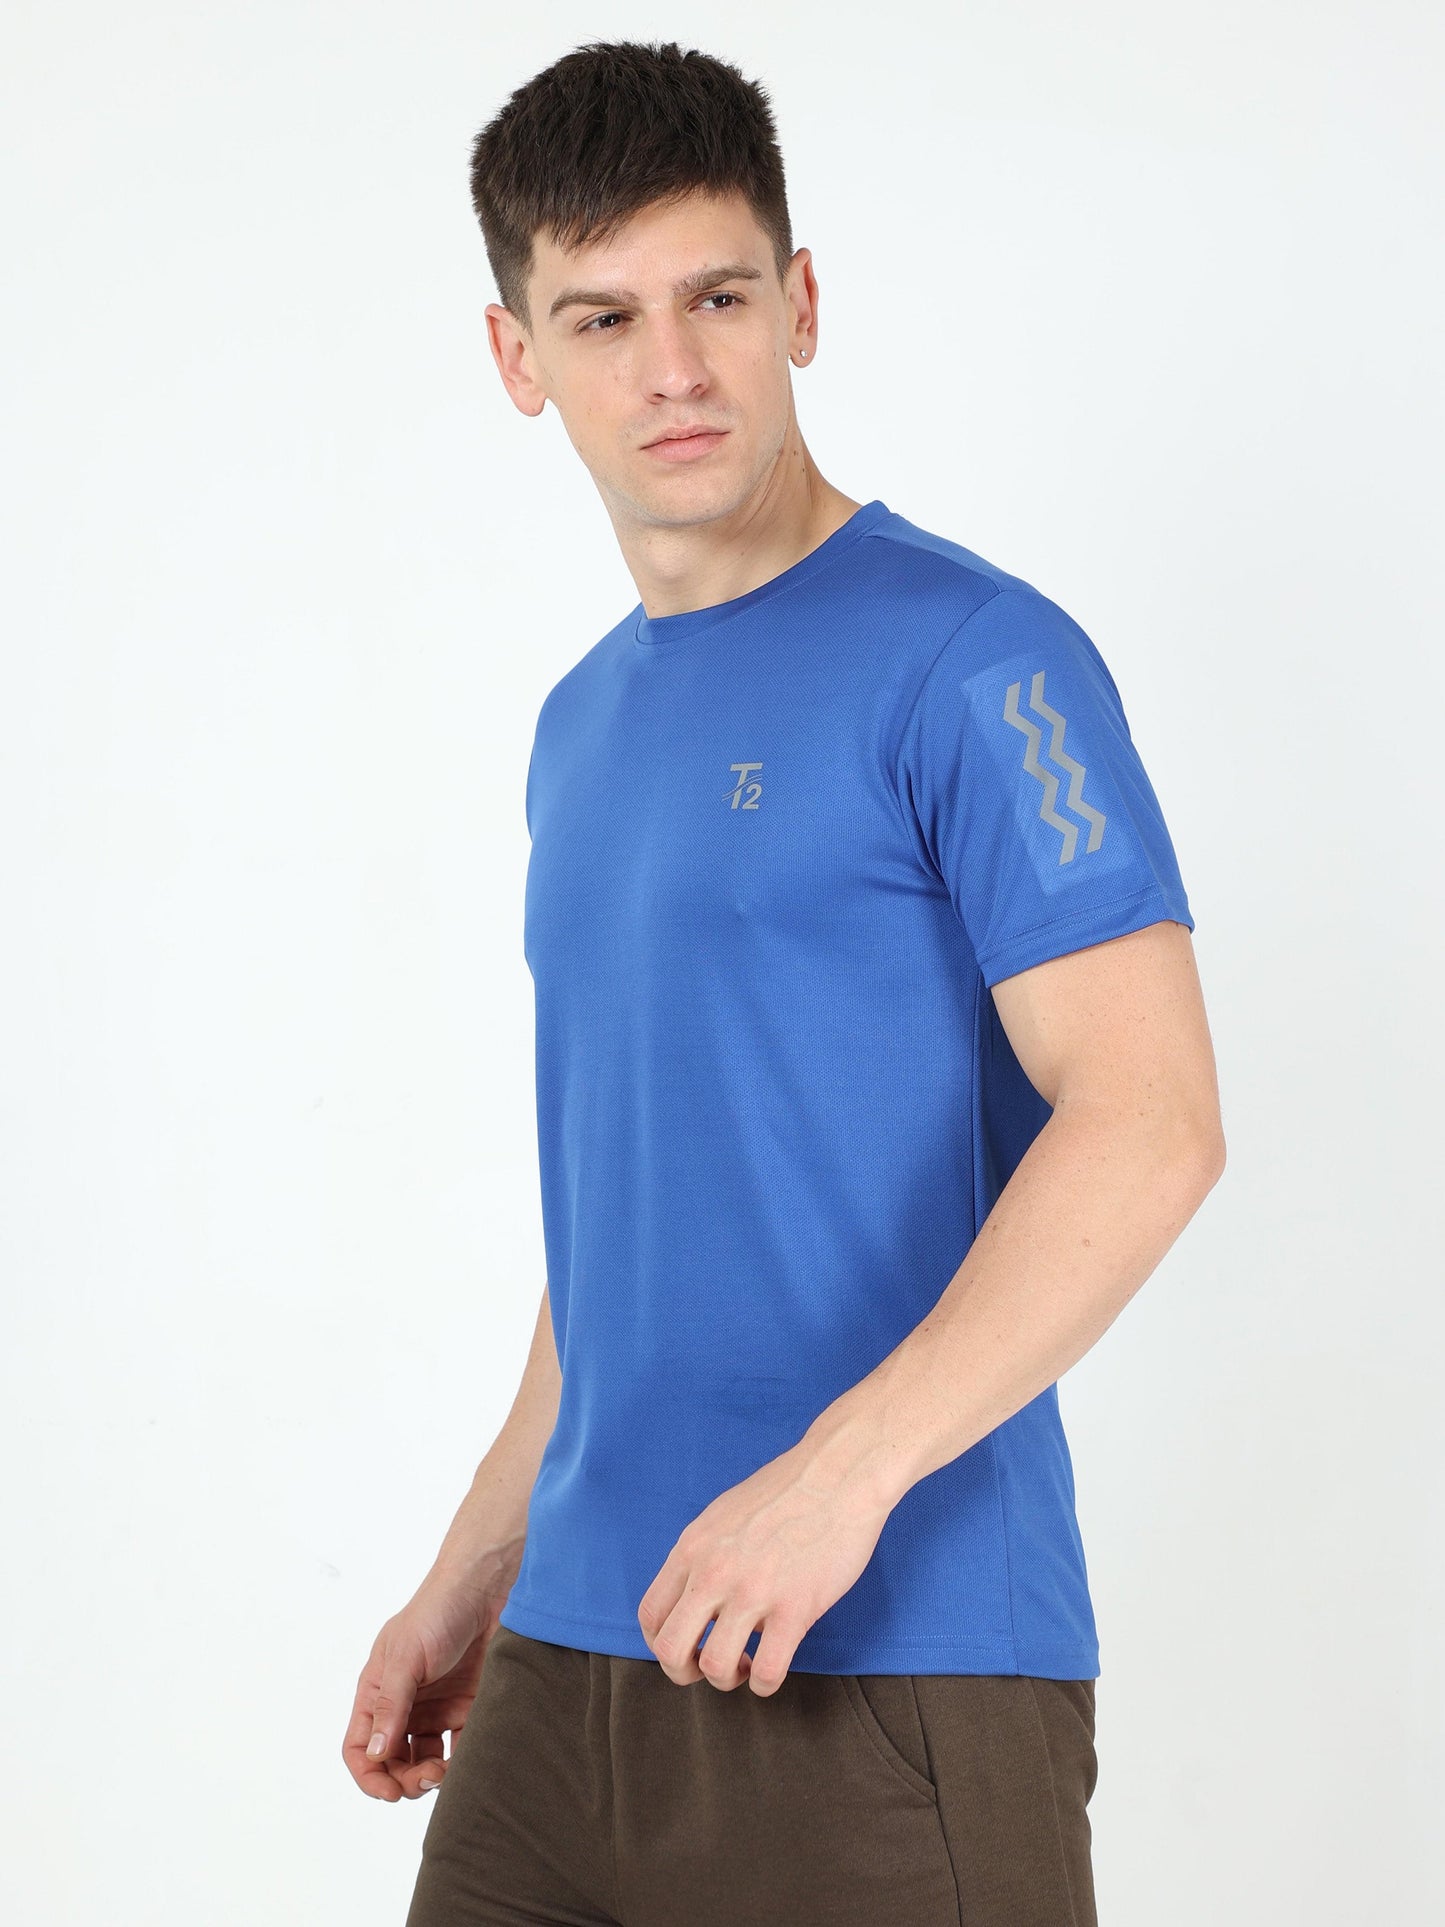 Athleisure Men's Premium T-Shirt – Blue